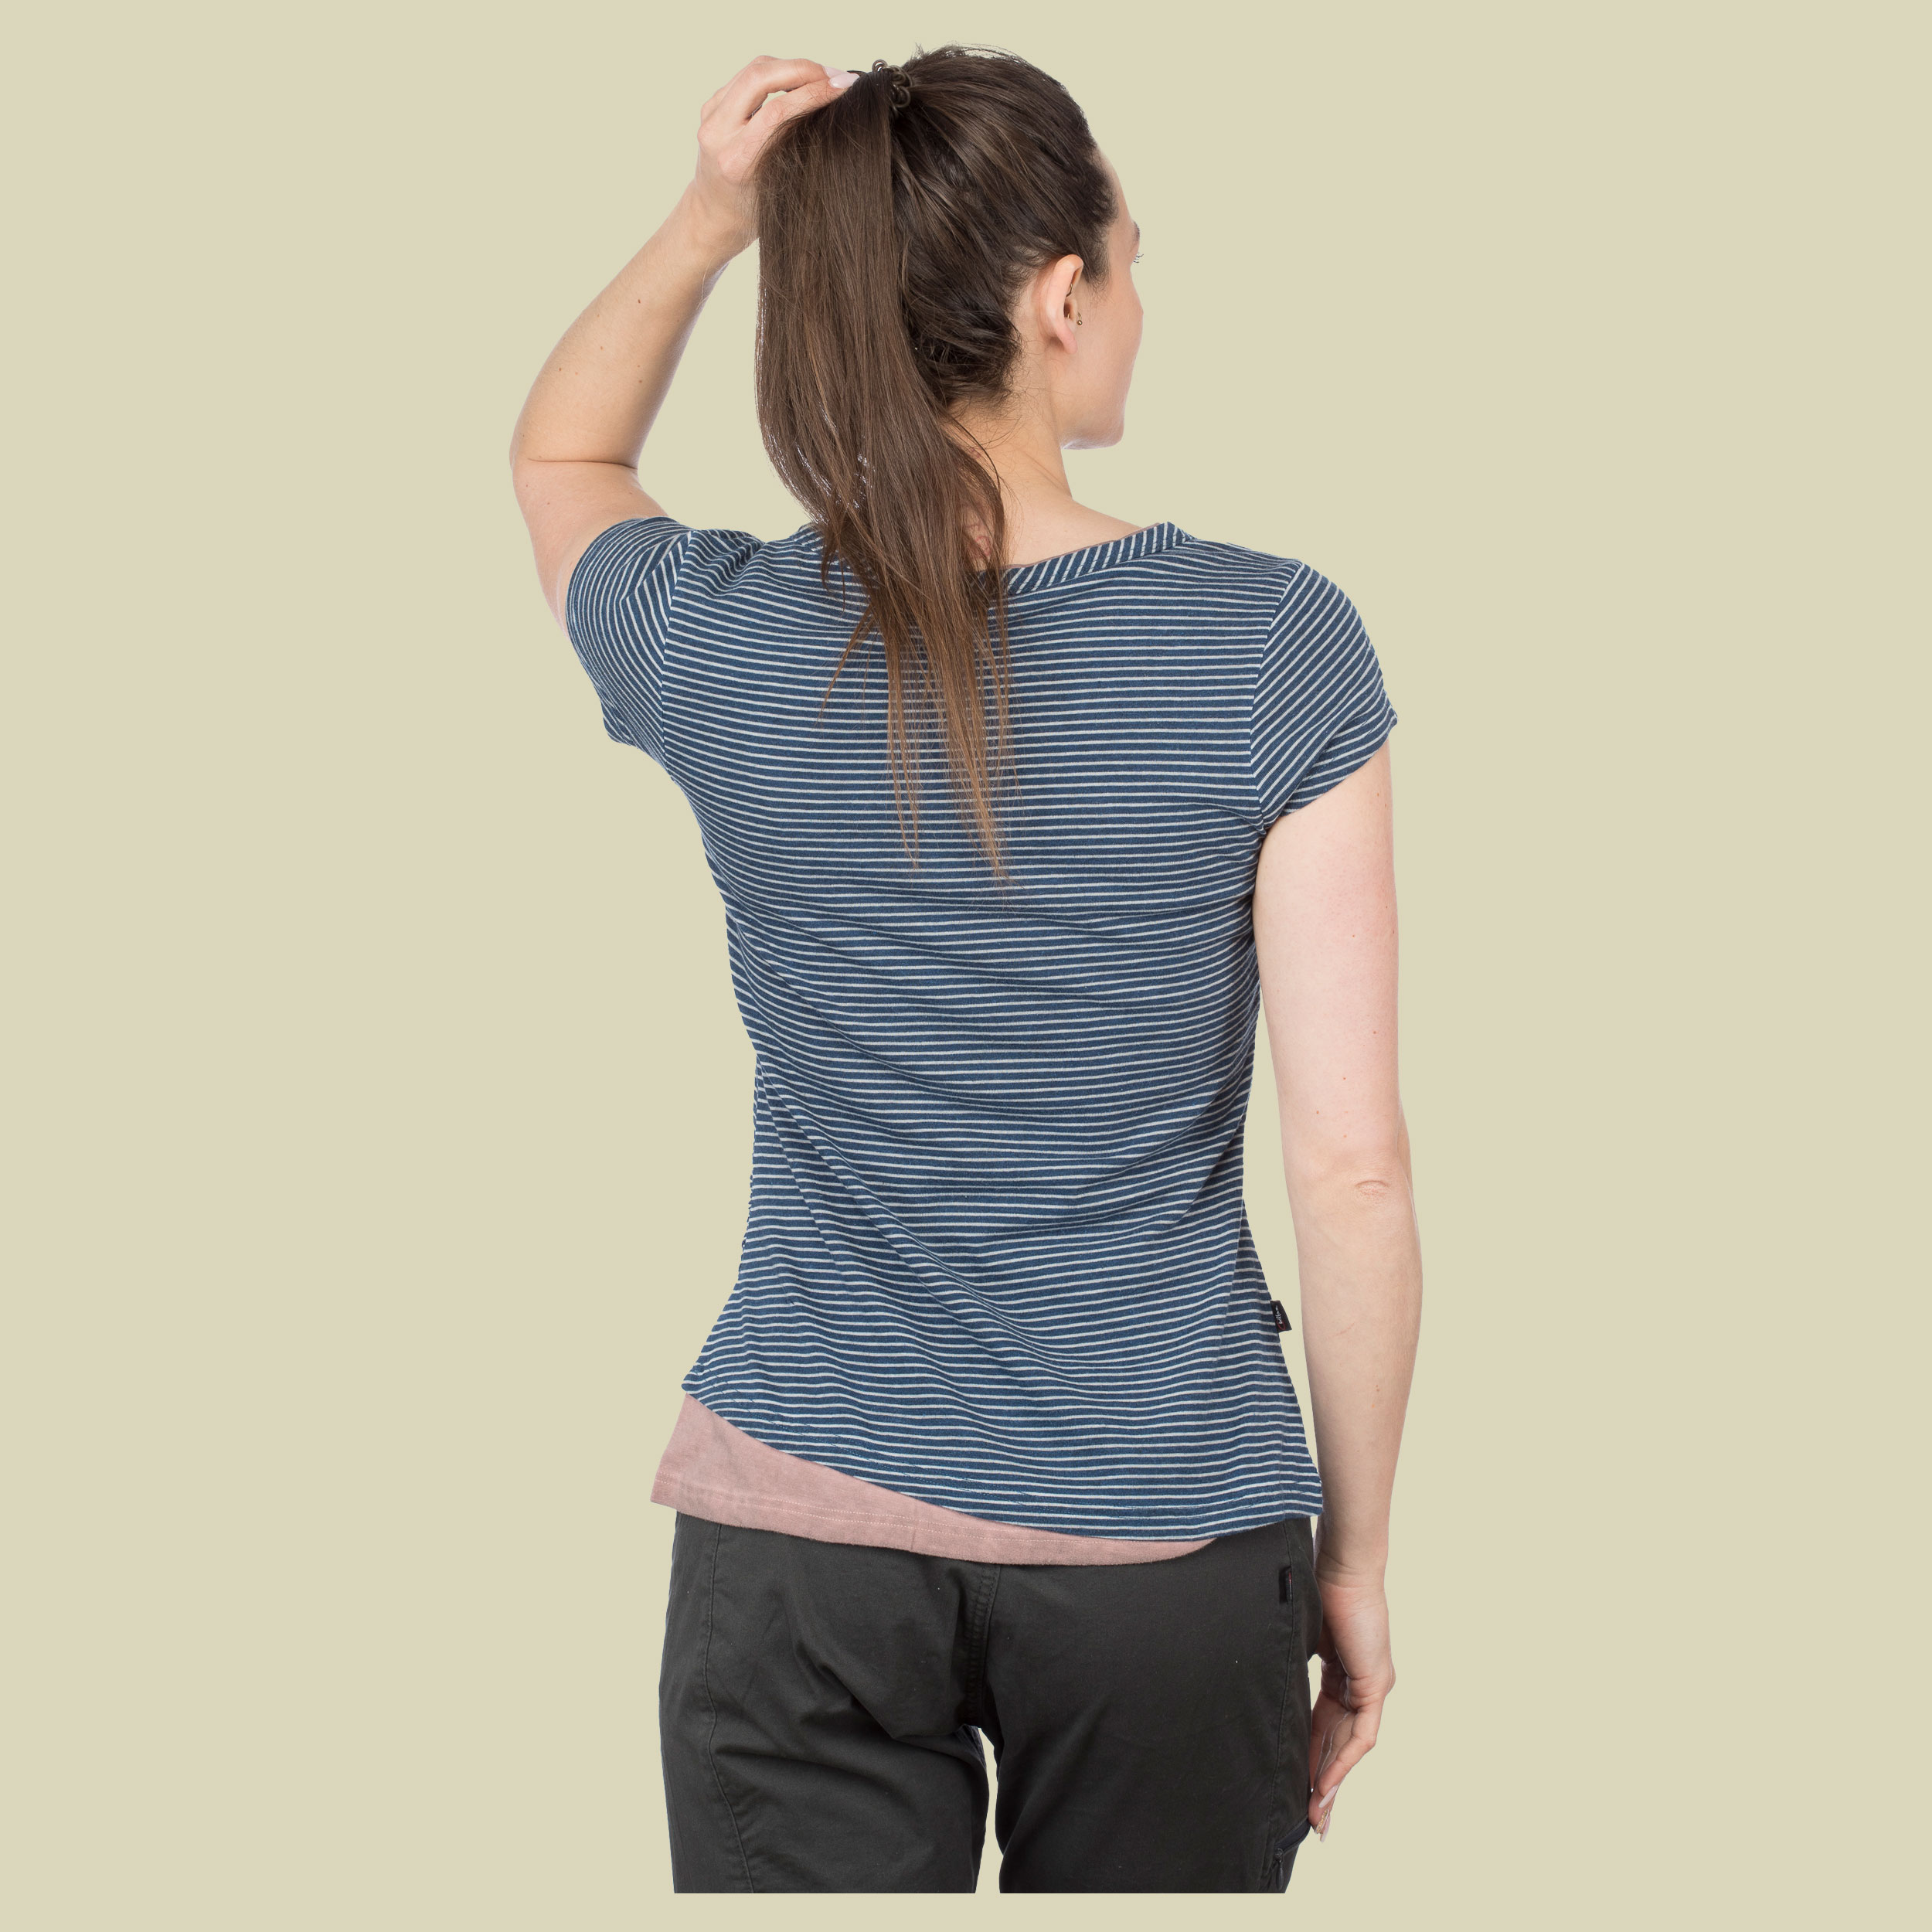 Fancy Little Dot T-Shirt Women Größe 42 Farbe indigo blue stripes washed